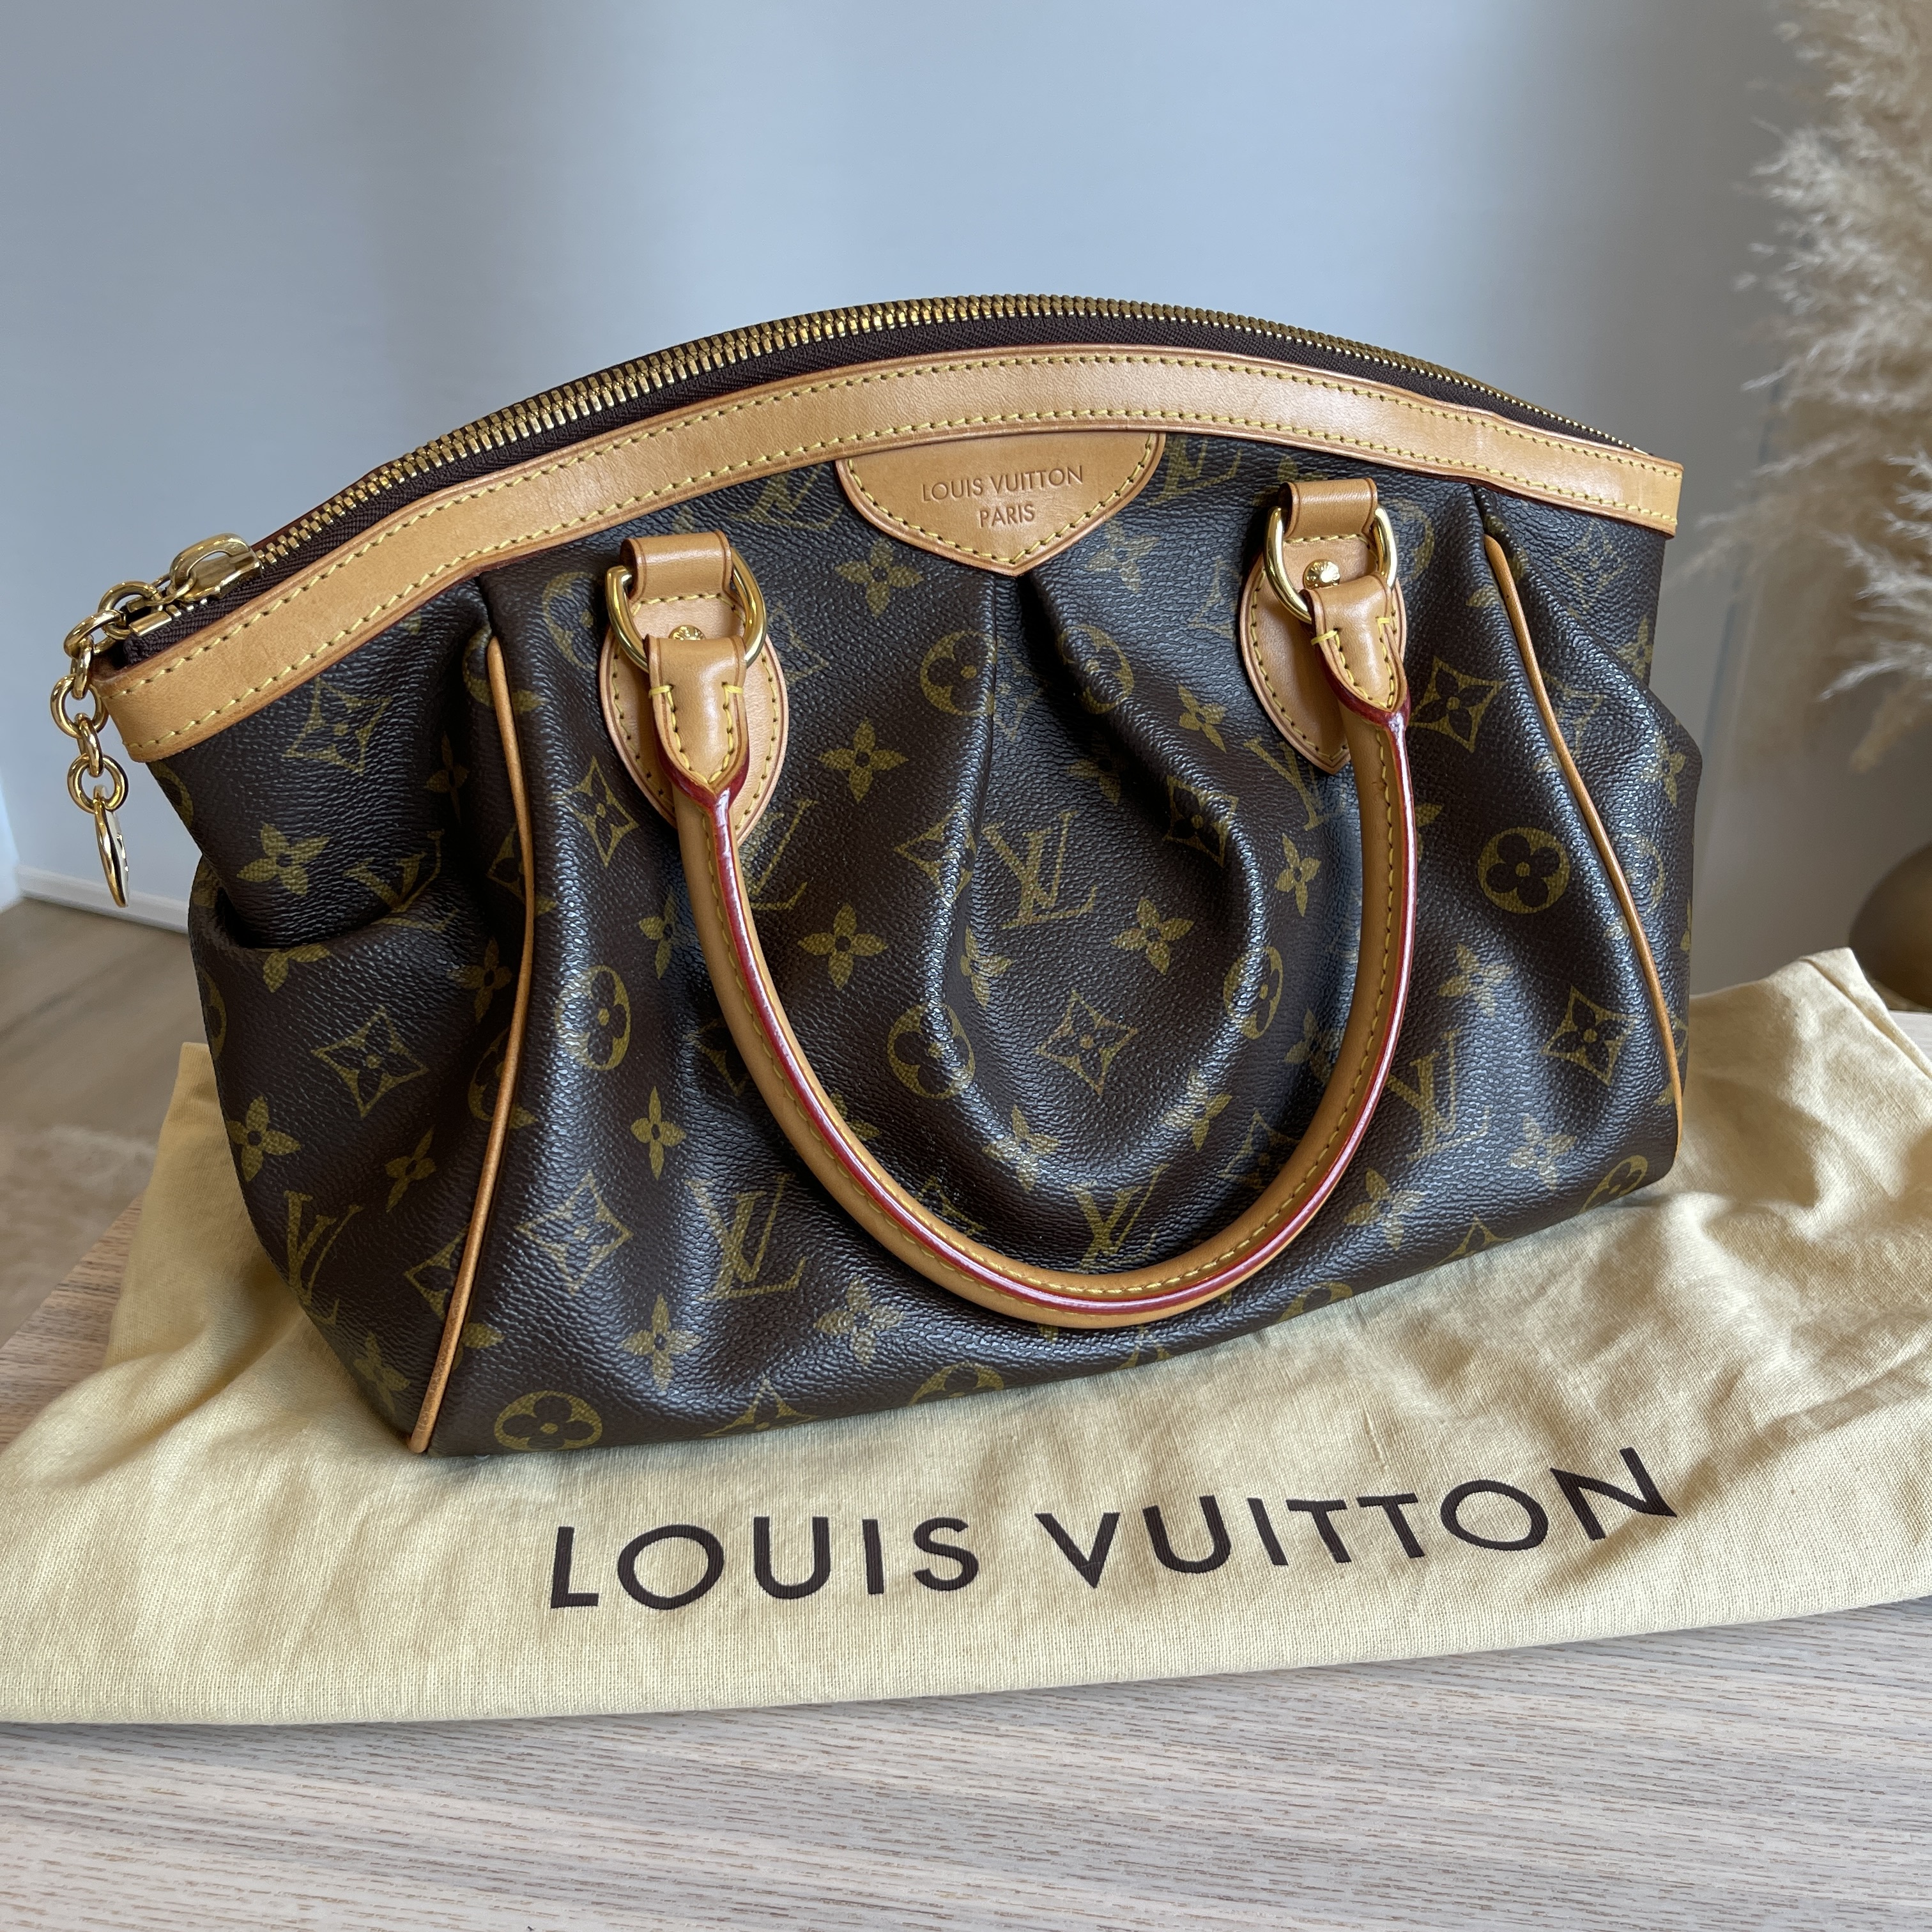 Louis Vuitton, Bags, Preowned Louis Vuitton Monogram Tivoli Pm Handbag